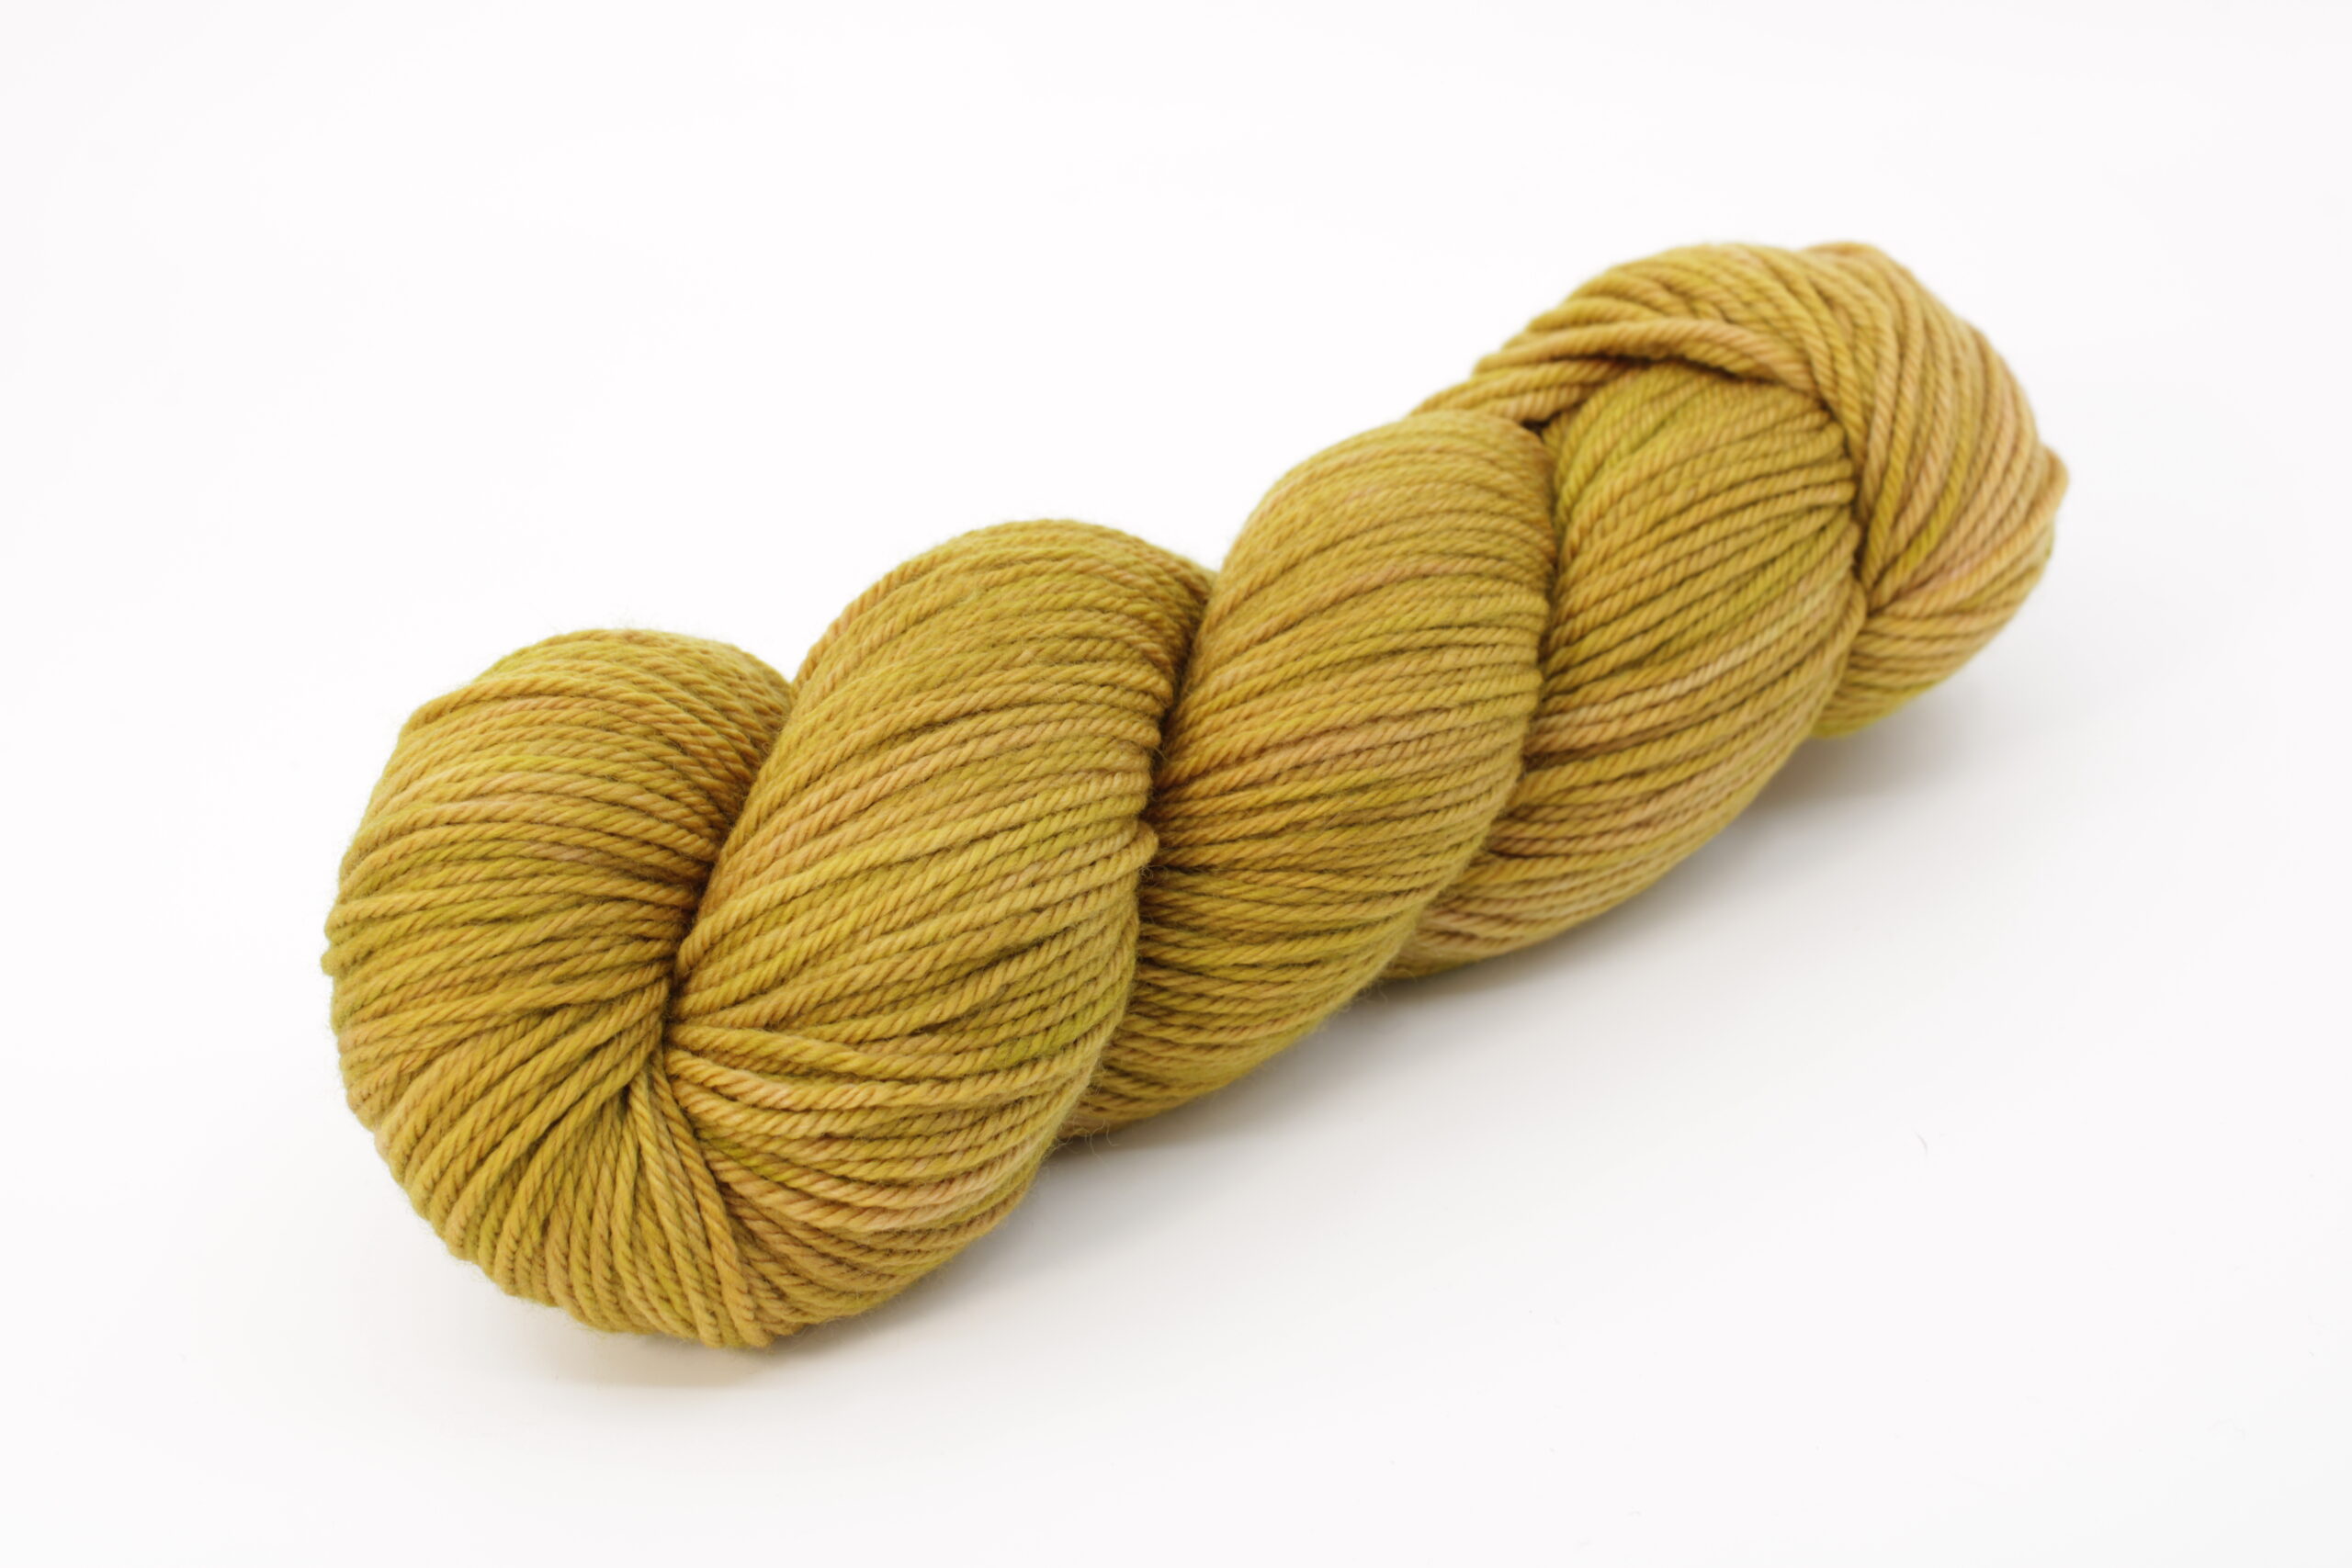 Fibrani wool, base: Flocon DK. Wool 100% merino untreated.color mustard yellow. Color: Stella.